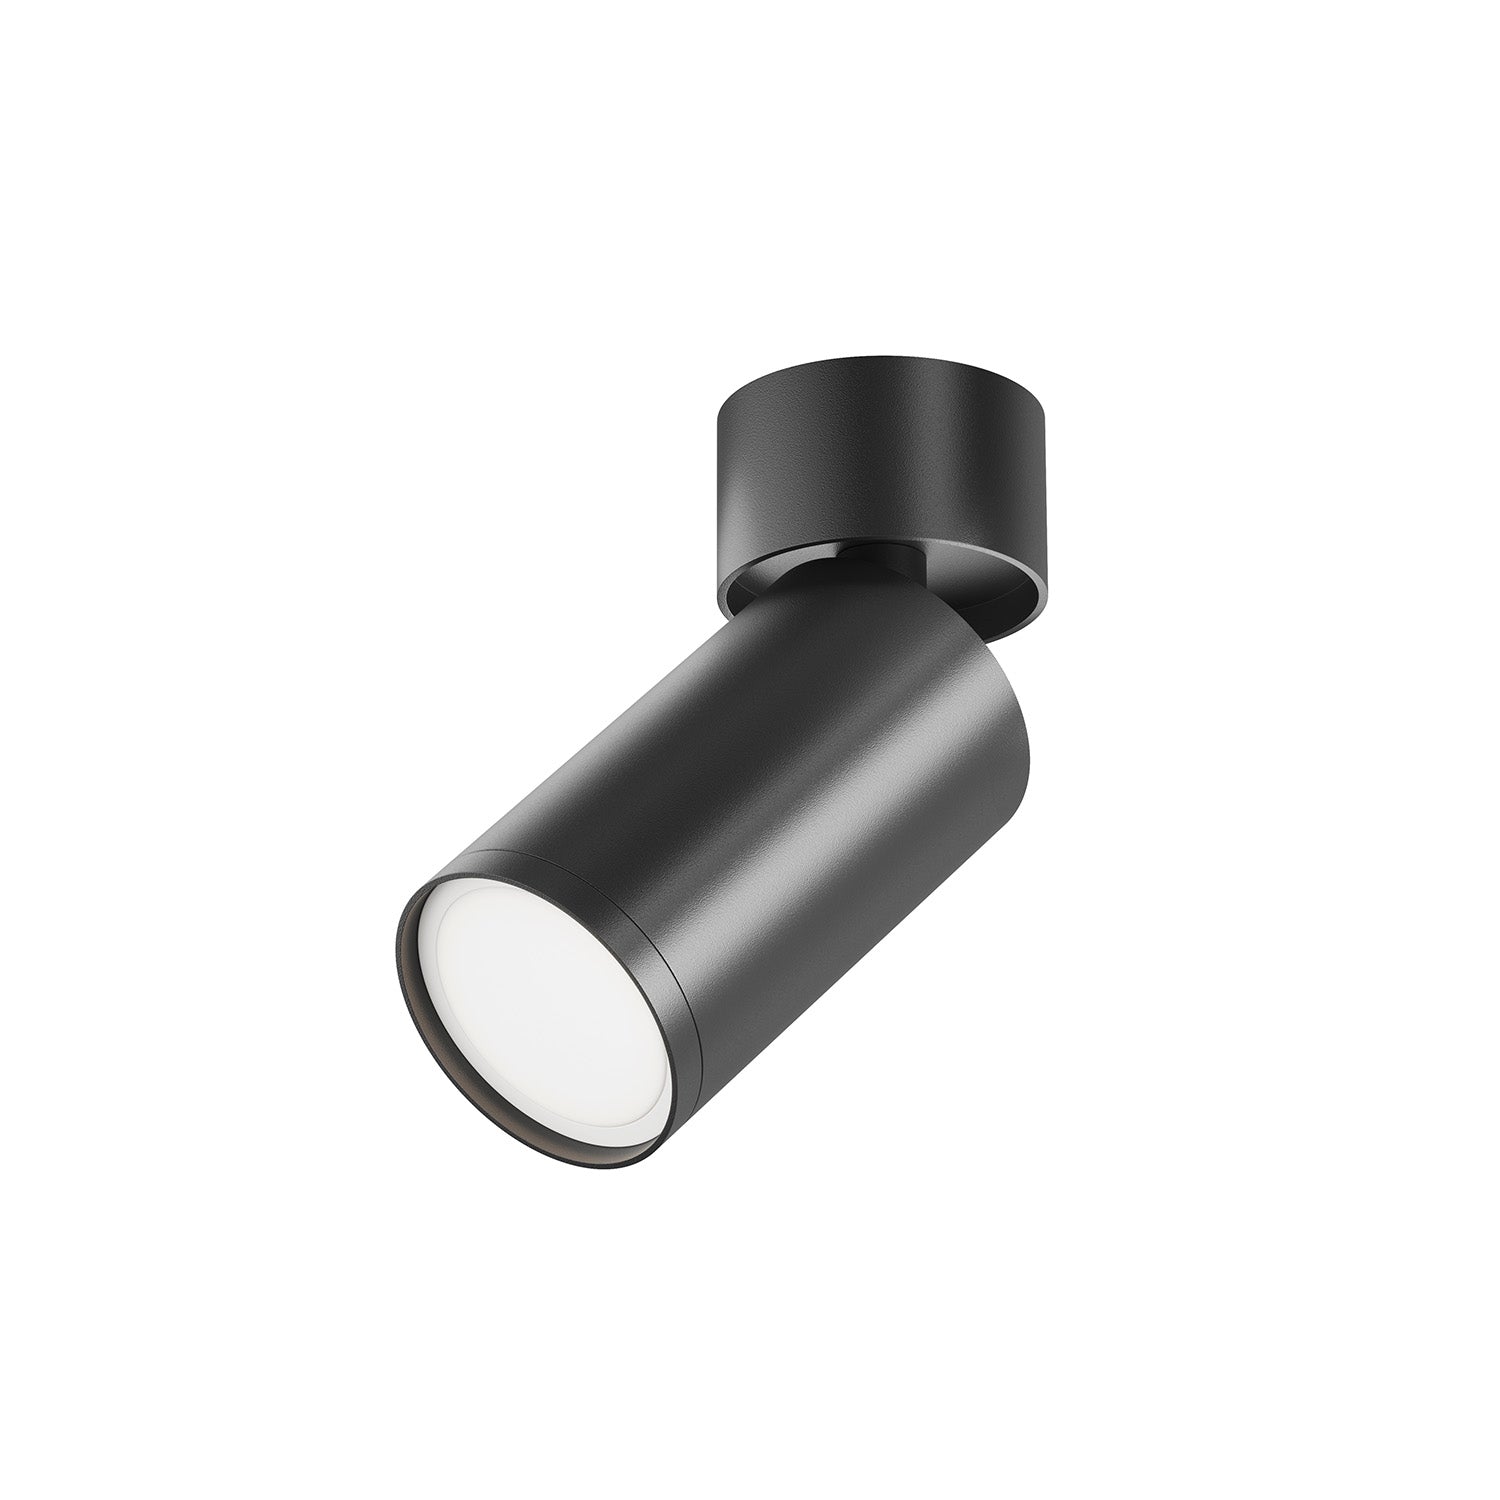 FOCUS S - Steel, black or gold adjustable wall spotlight